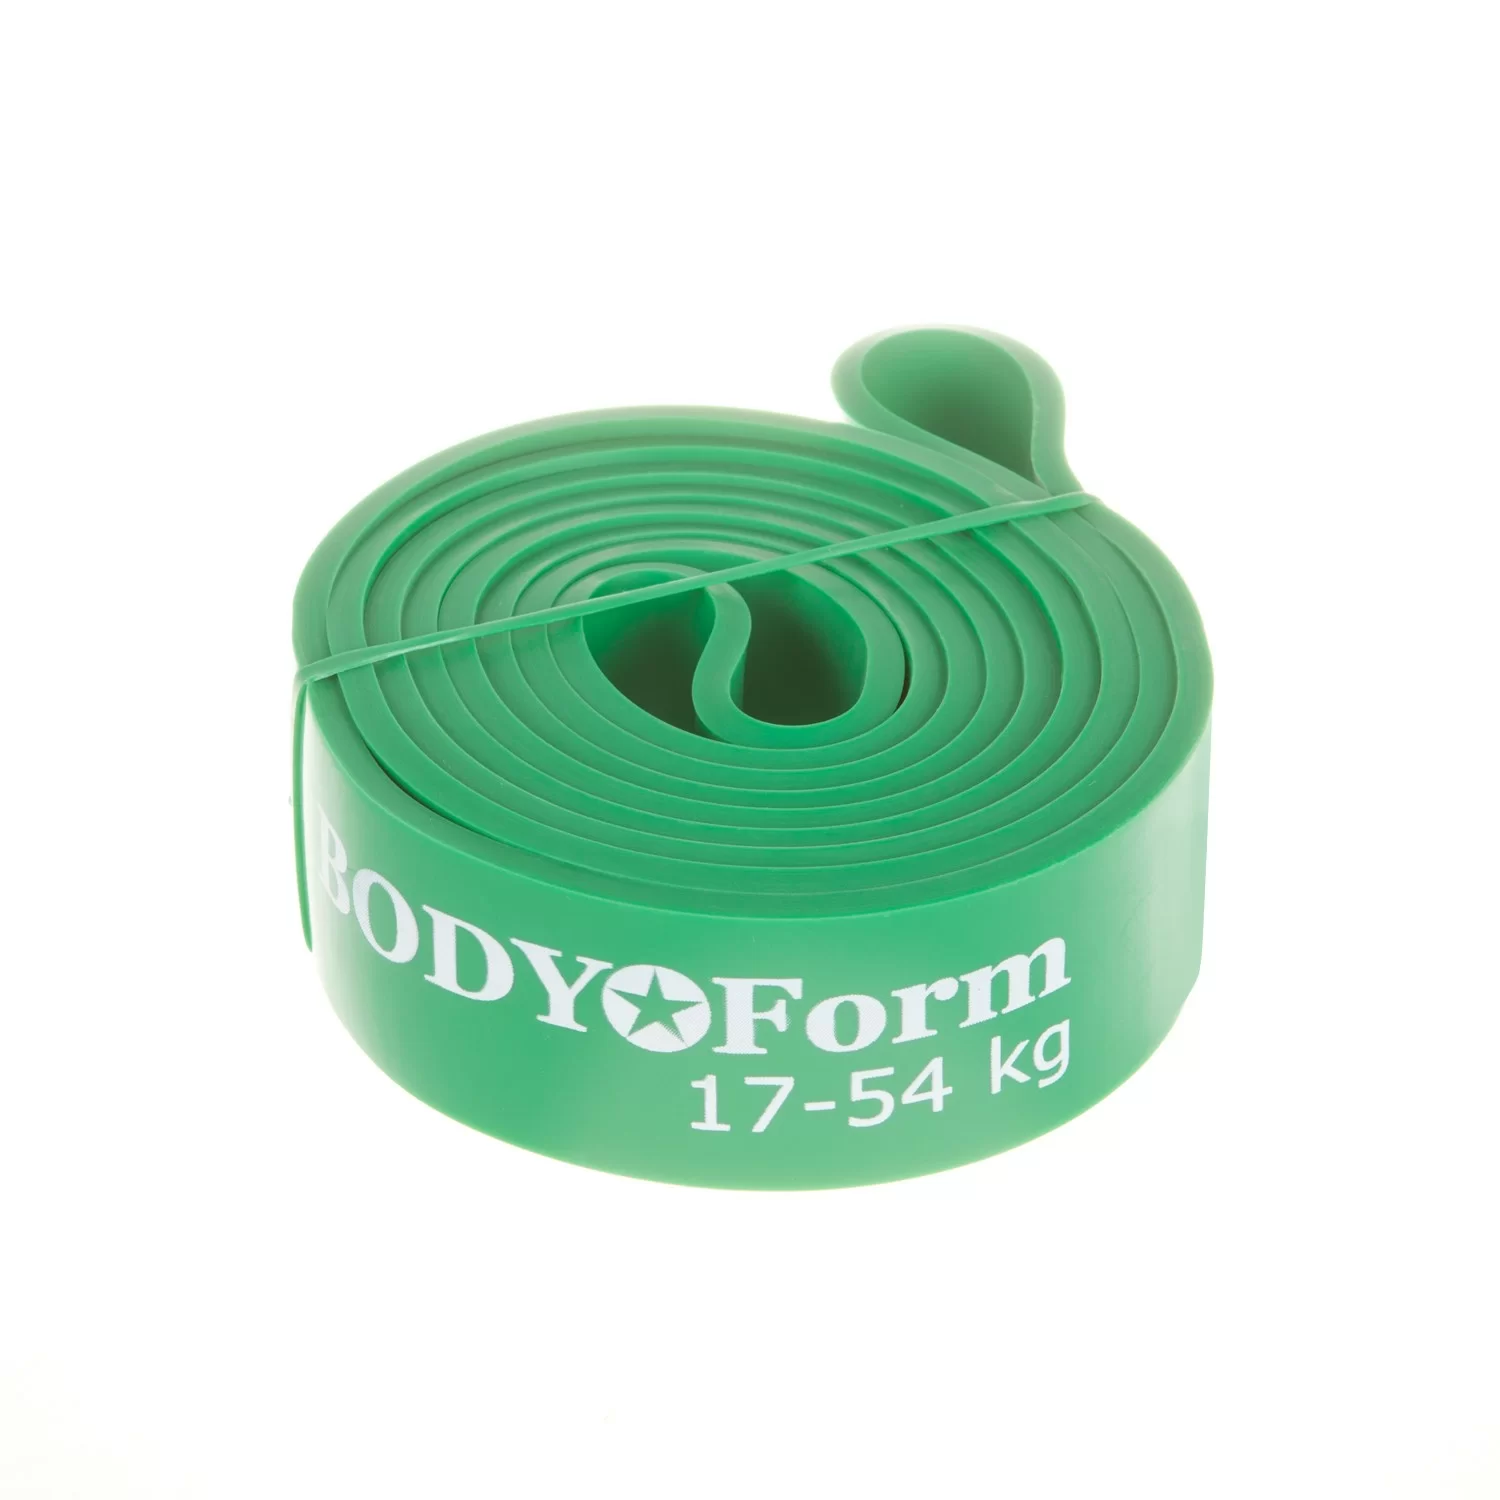 Фото Эспандер петля резиновая 208 * 4 * 0.45 см, 17-54 кг Body Form зеленый BF-RL40 со склада магазина СпортСЕ